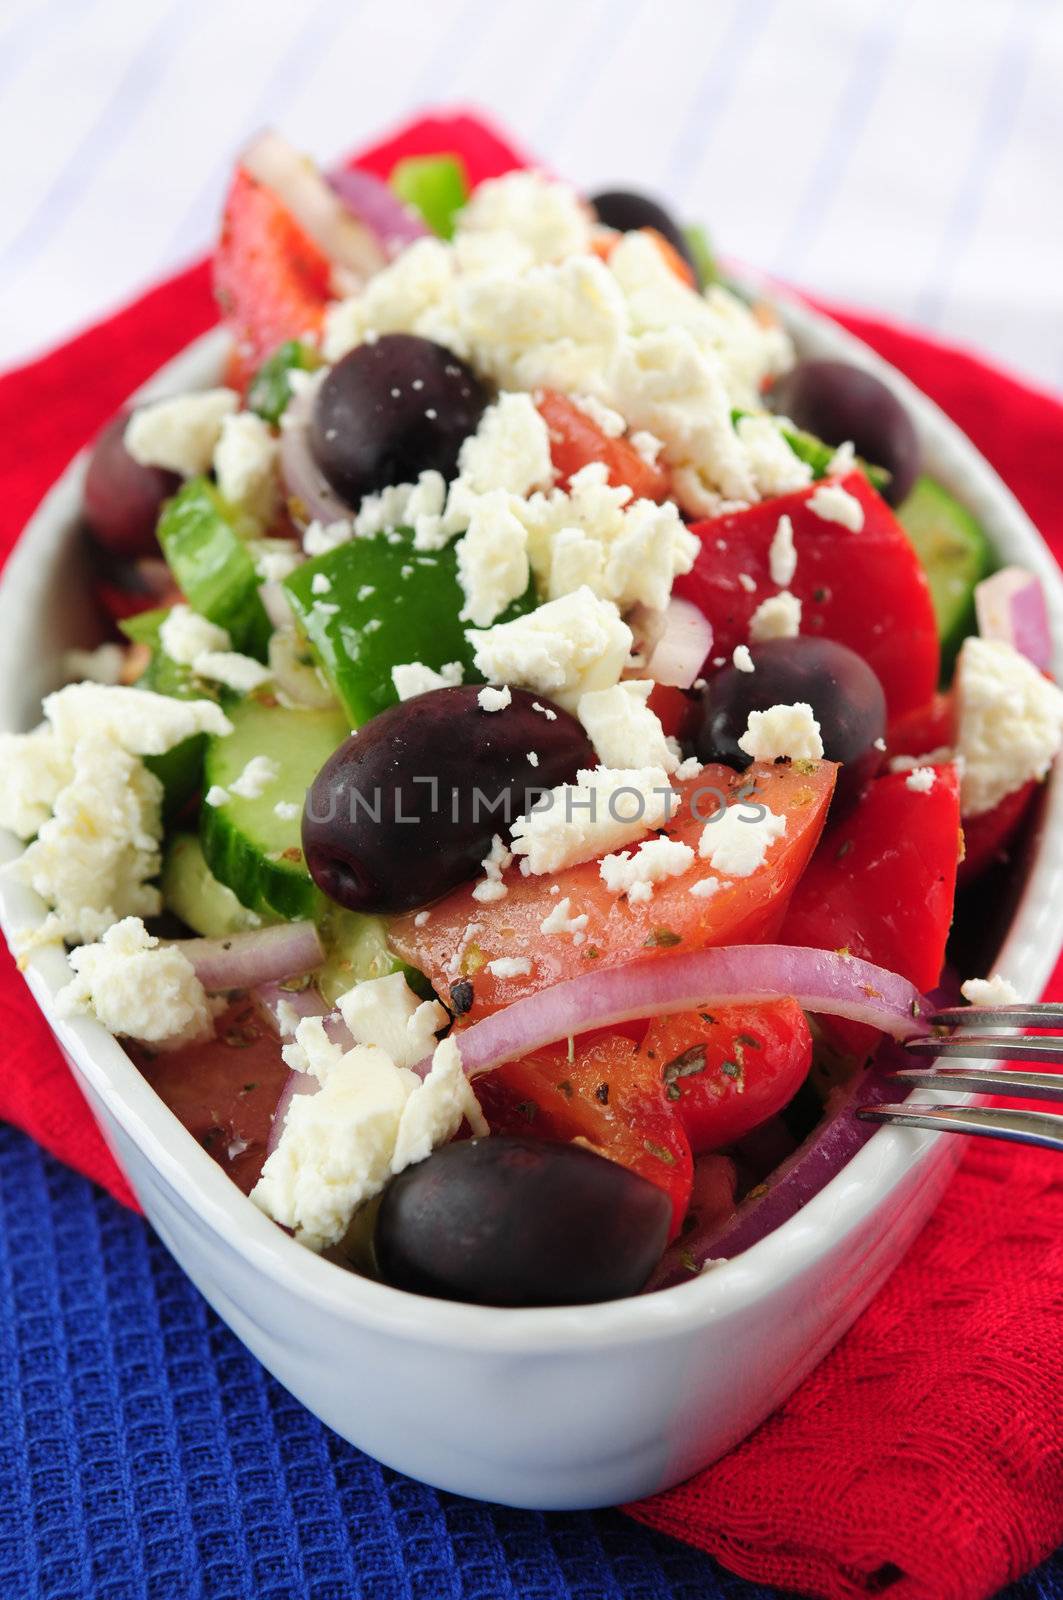 Greek salad by elenathewise